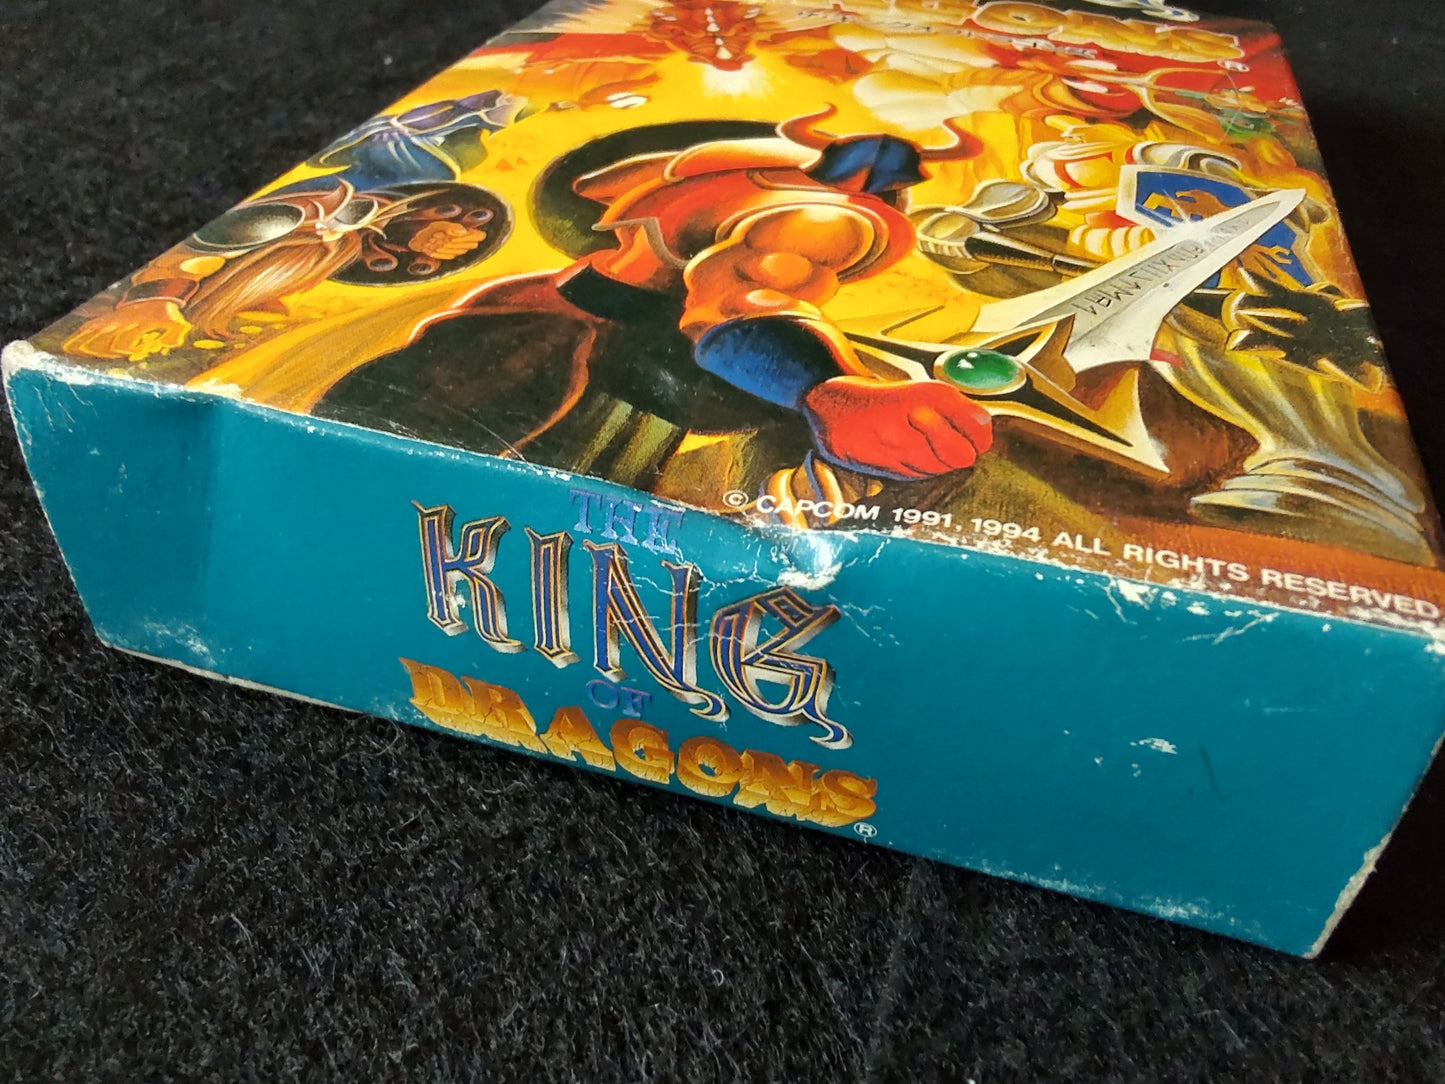 King of Dragons Super Famicom Game SFC Cartridge w/,Manual, Box,Working-f0725-